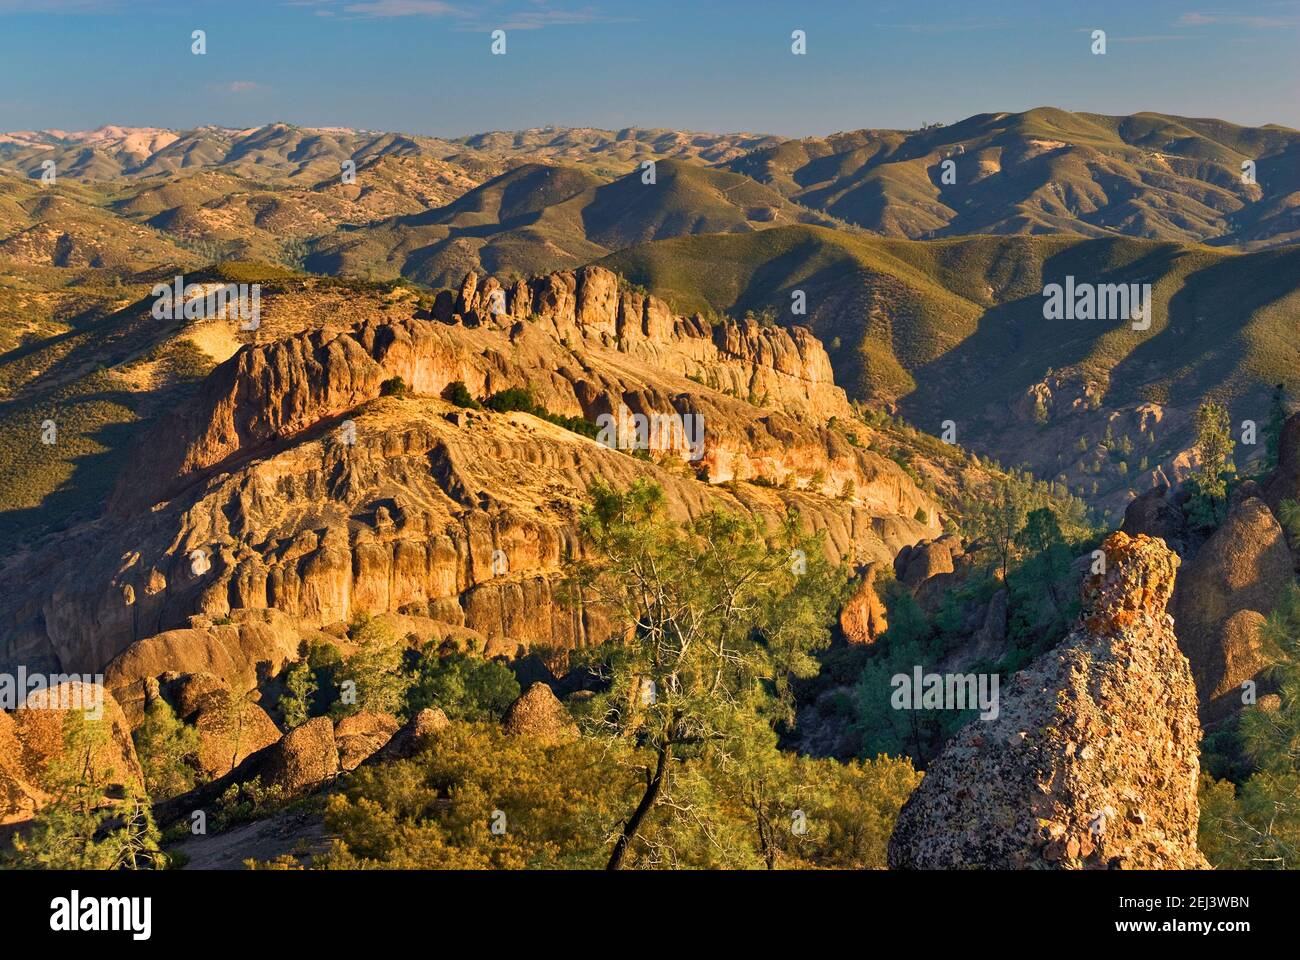 Balconies Cliffs seen from High Peaks Trail, Pinnacles National Monument, California, USA Stock Photo